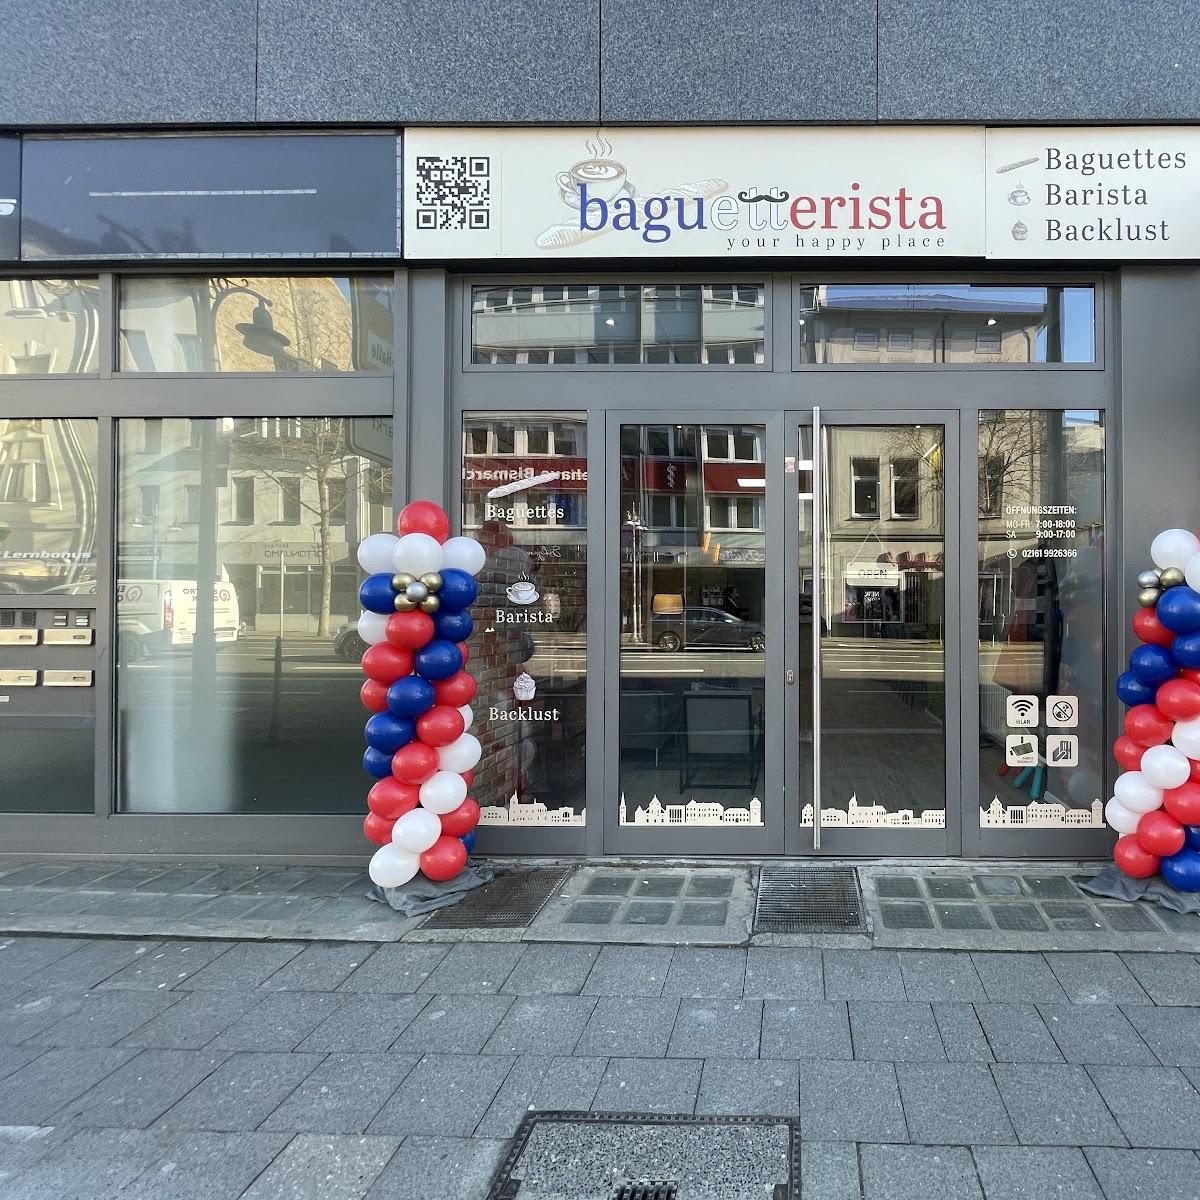 Restaurant "Baguetterista - Baguettes Barista Backlust" in Mönchengladbach